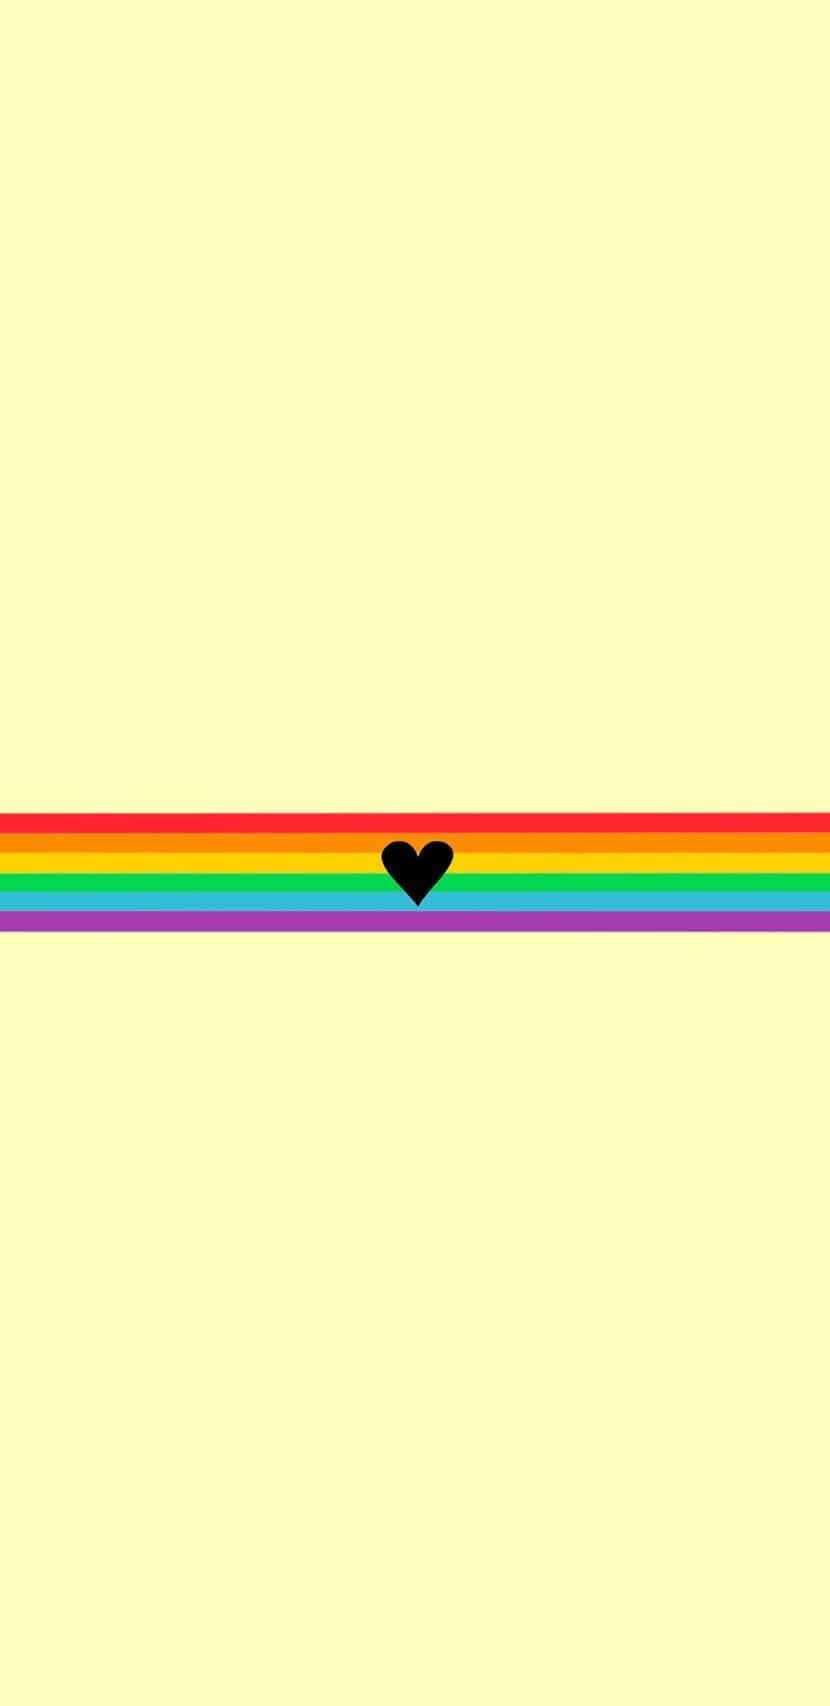 Download Aesthetic LGBT Pride iPhone Wallpaper